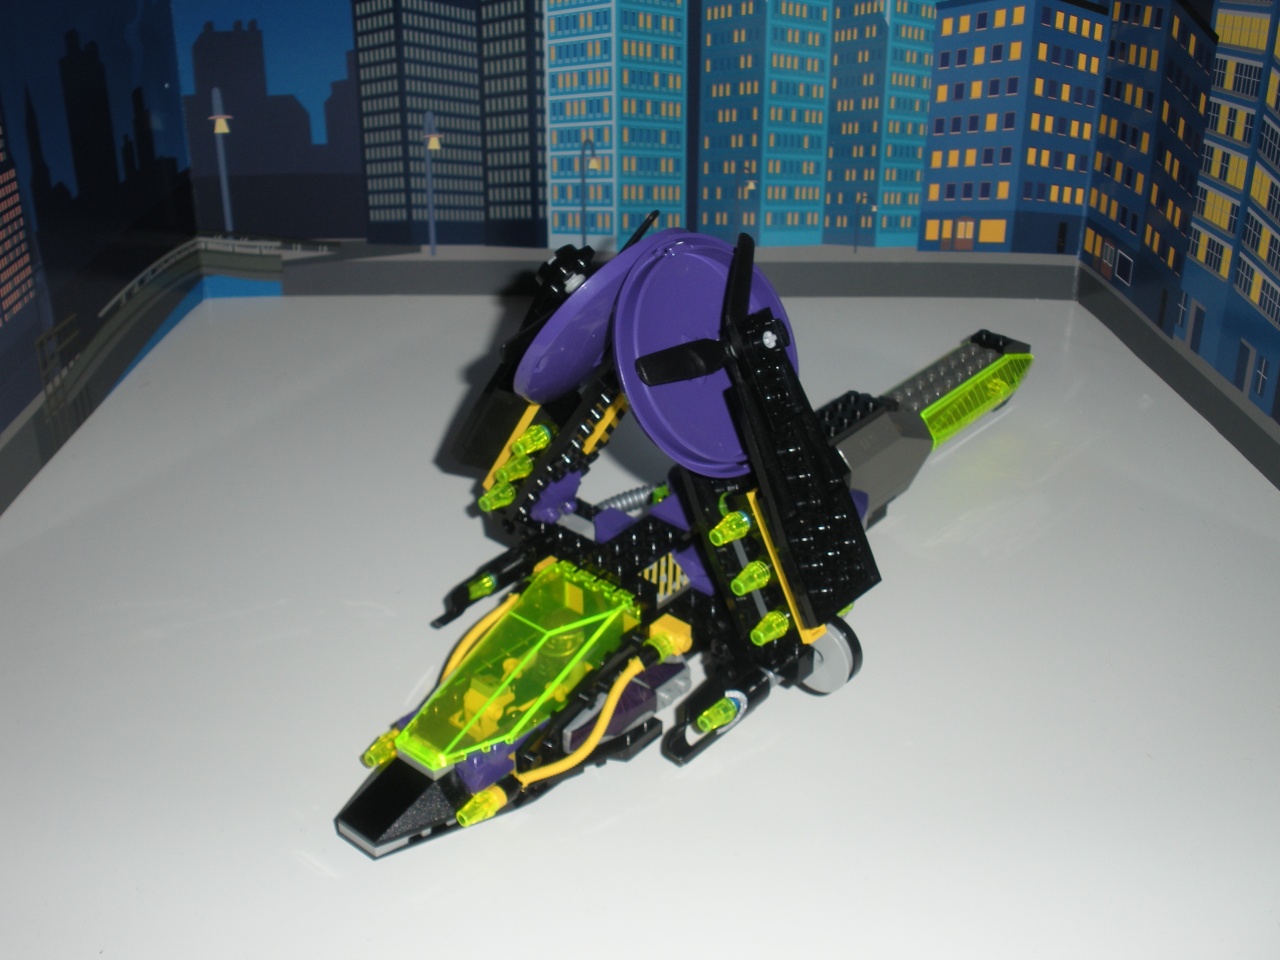 The Cyberfly Fighter Version I Cyberf15